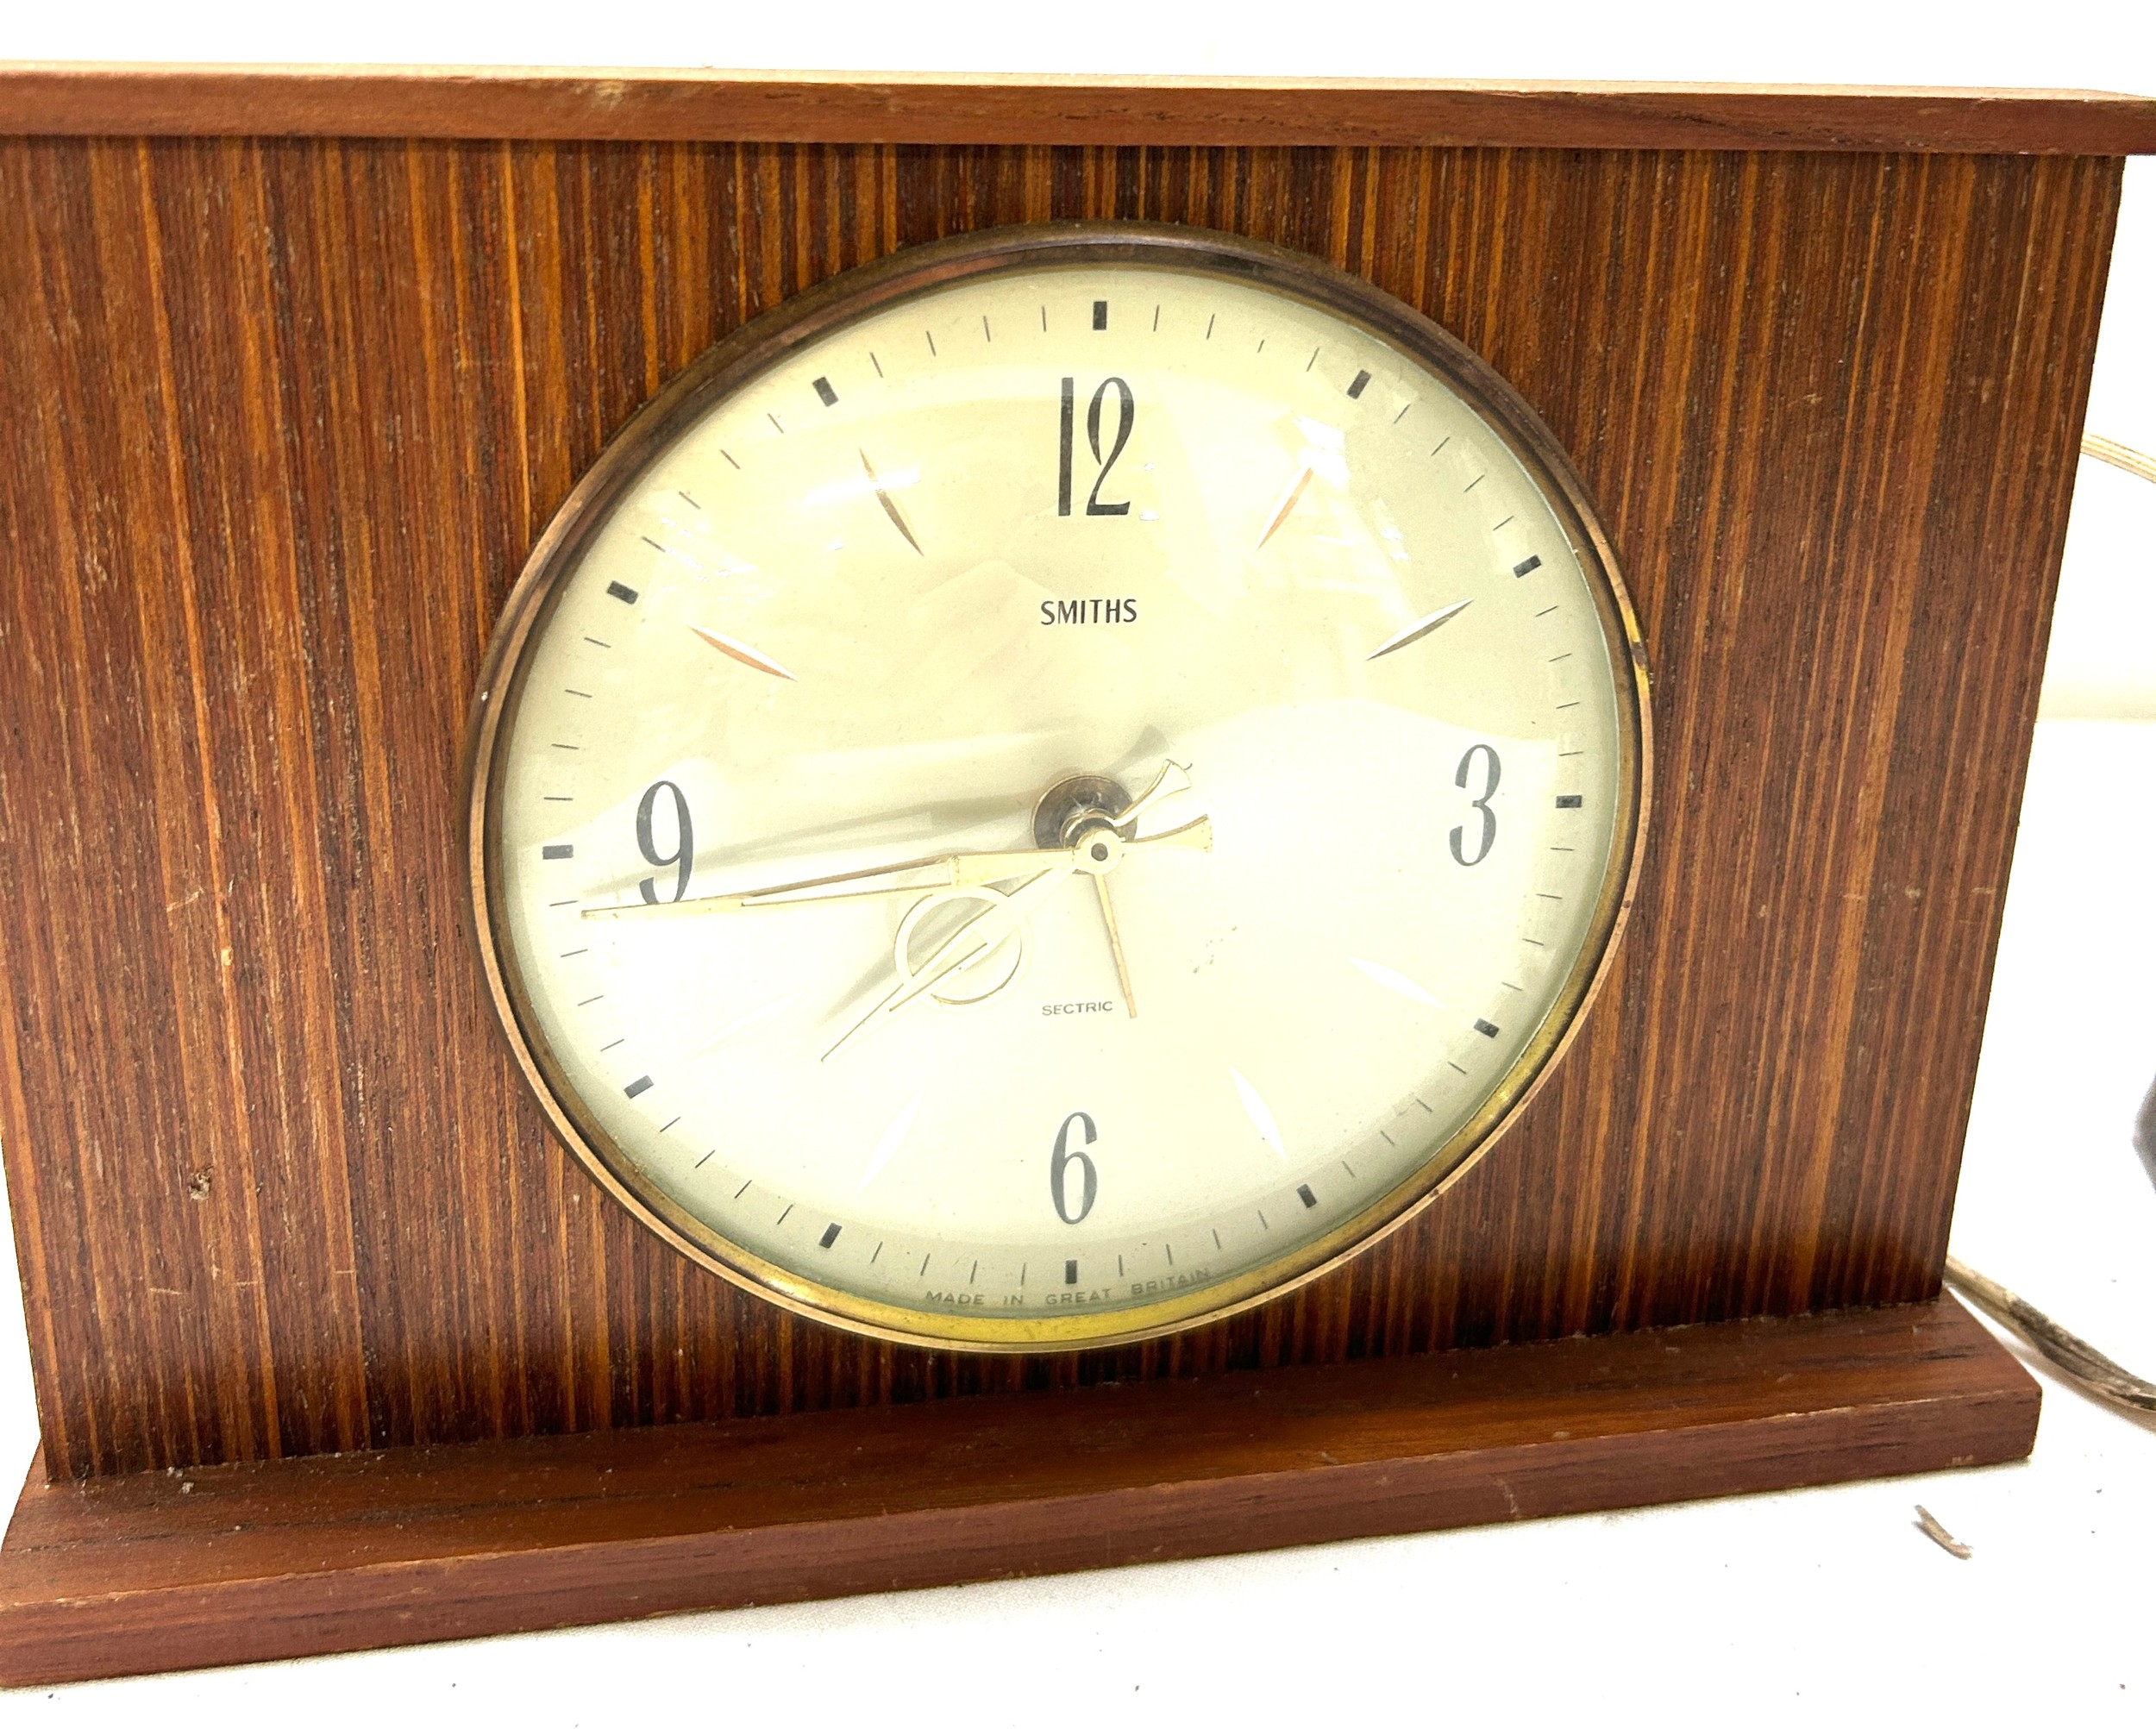 Two vintage clocks one Ingersoll Bakelite mantel clock one Smiths electric 1960's mantel clock - Image 3 of 5